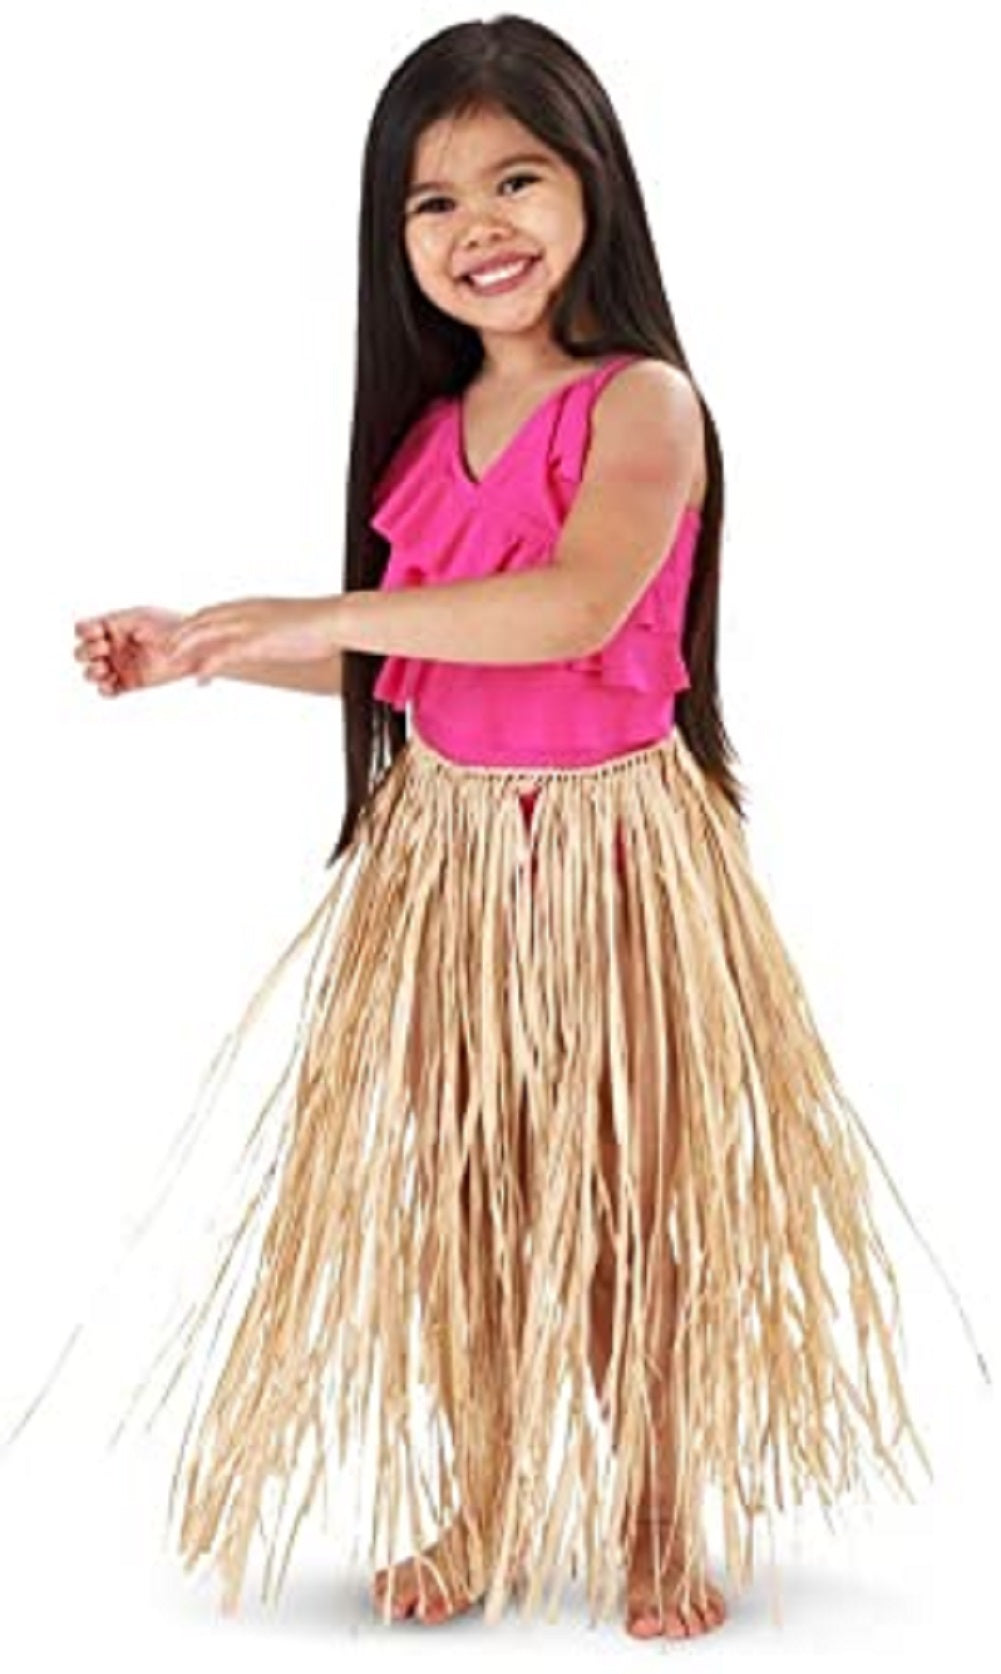 Raffia Grass Skirt - Hawaiian - Natural - Costume Accessory - Large Child/Teen